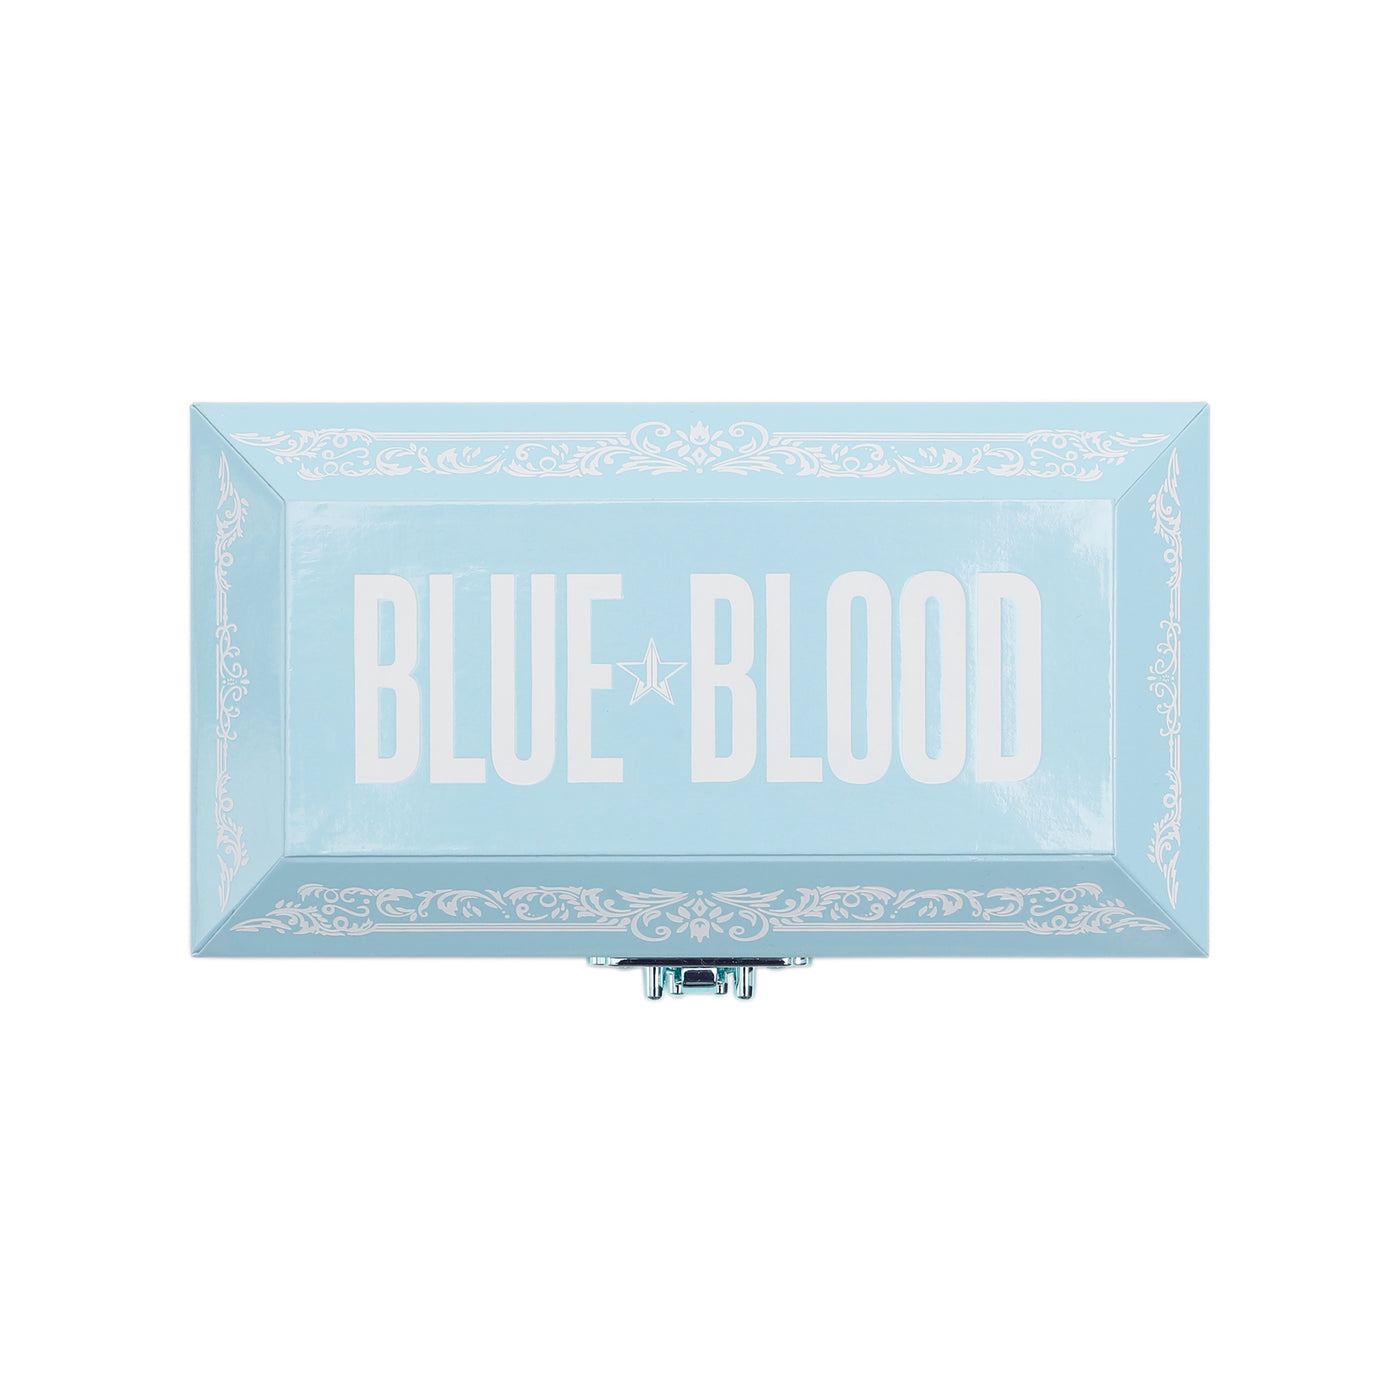 Jeffree Star Cosmetics - Blue Blood Palette